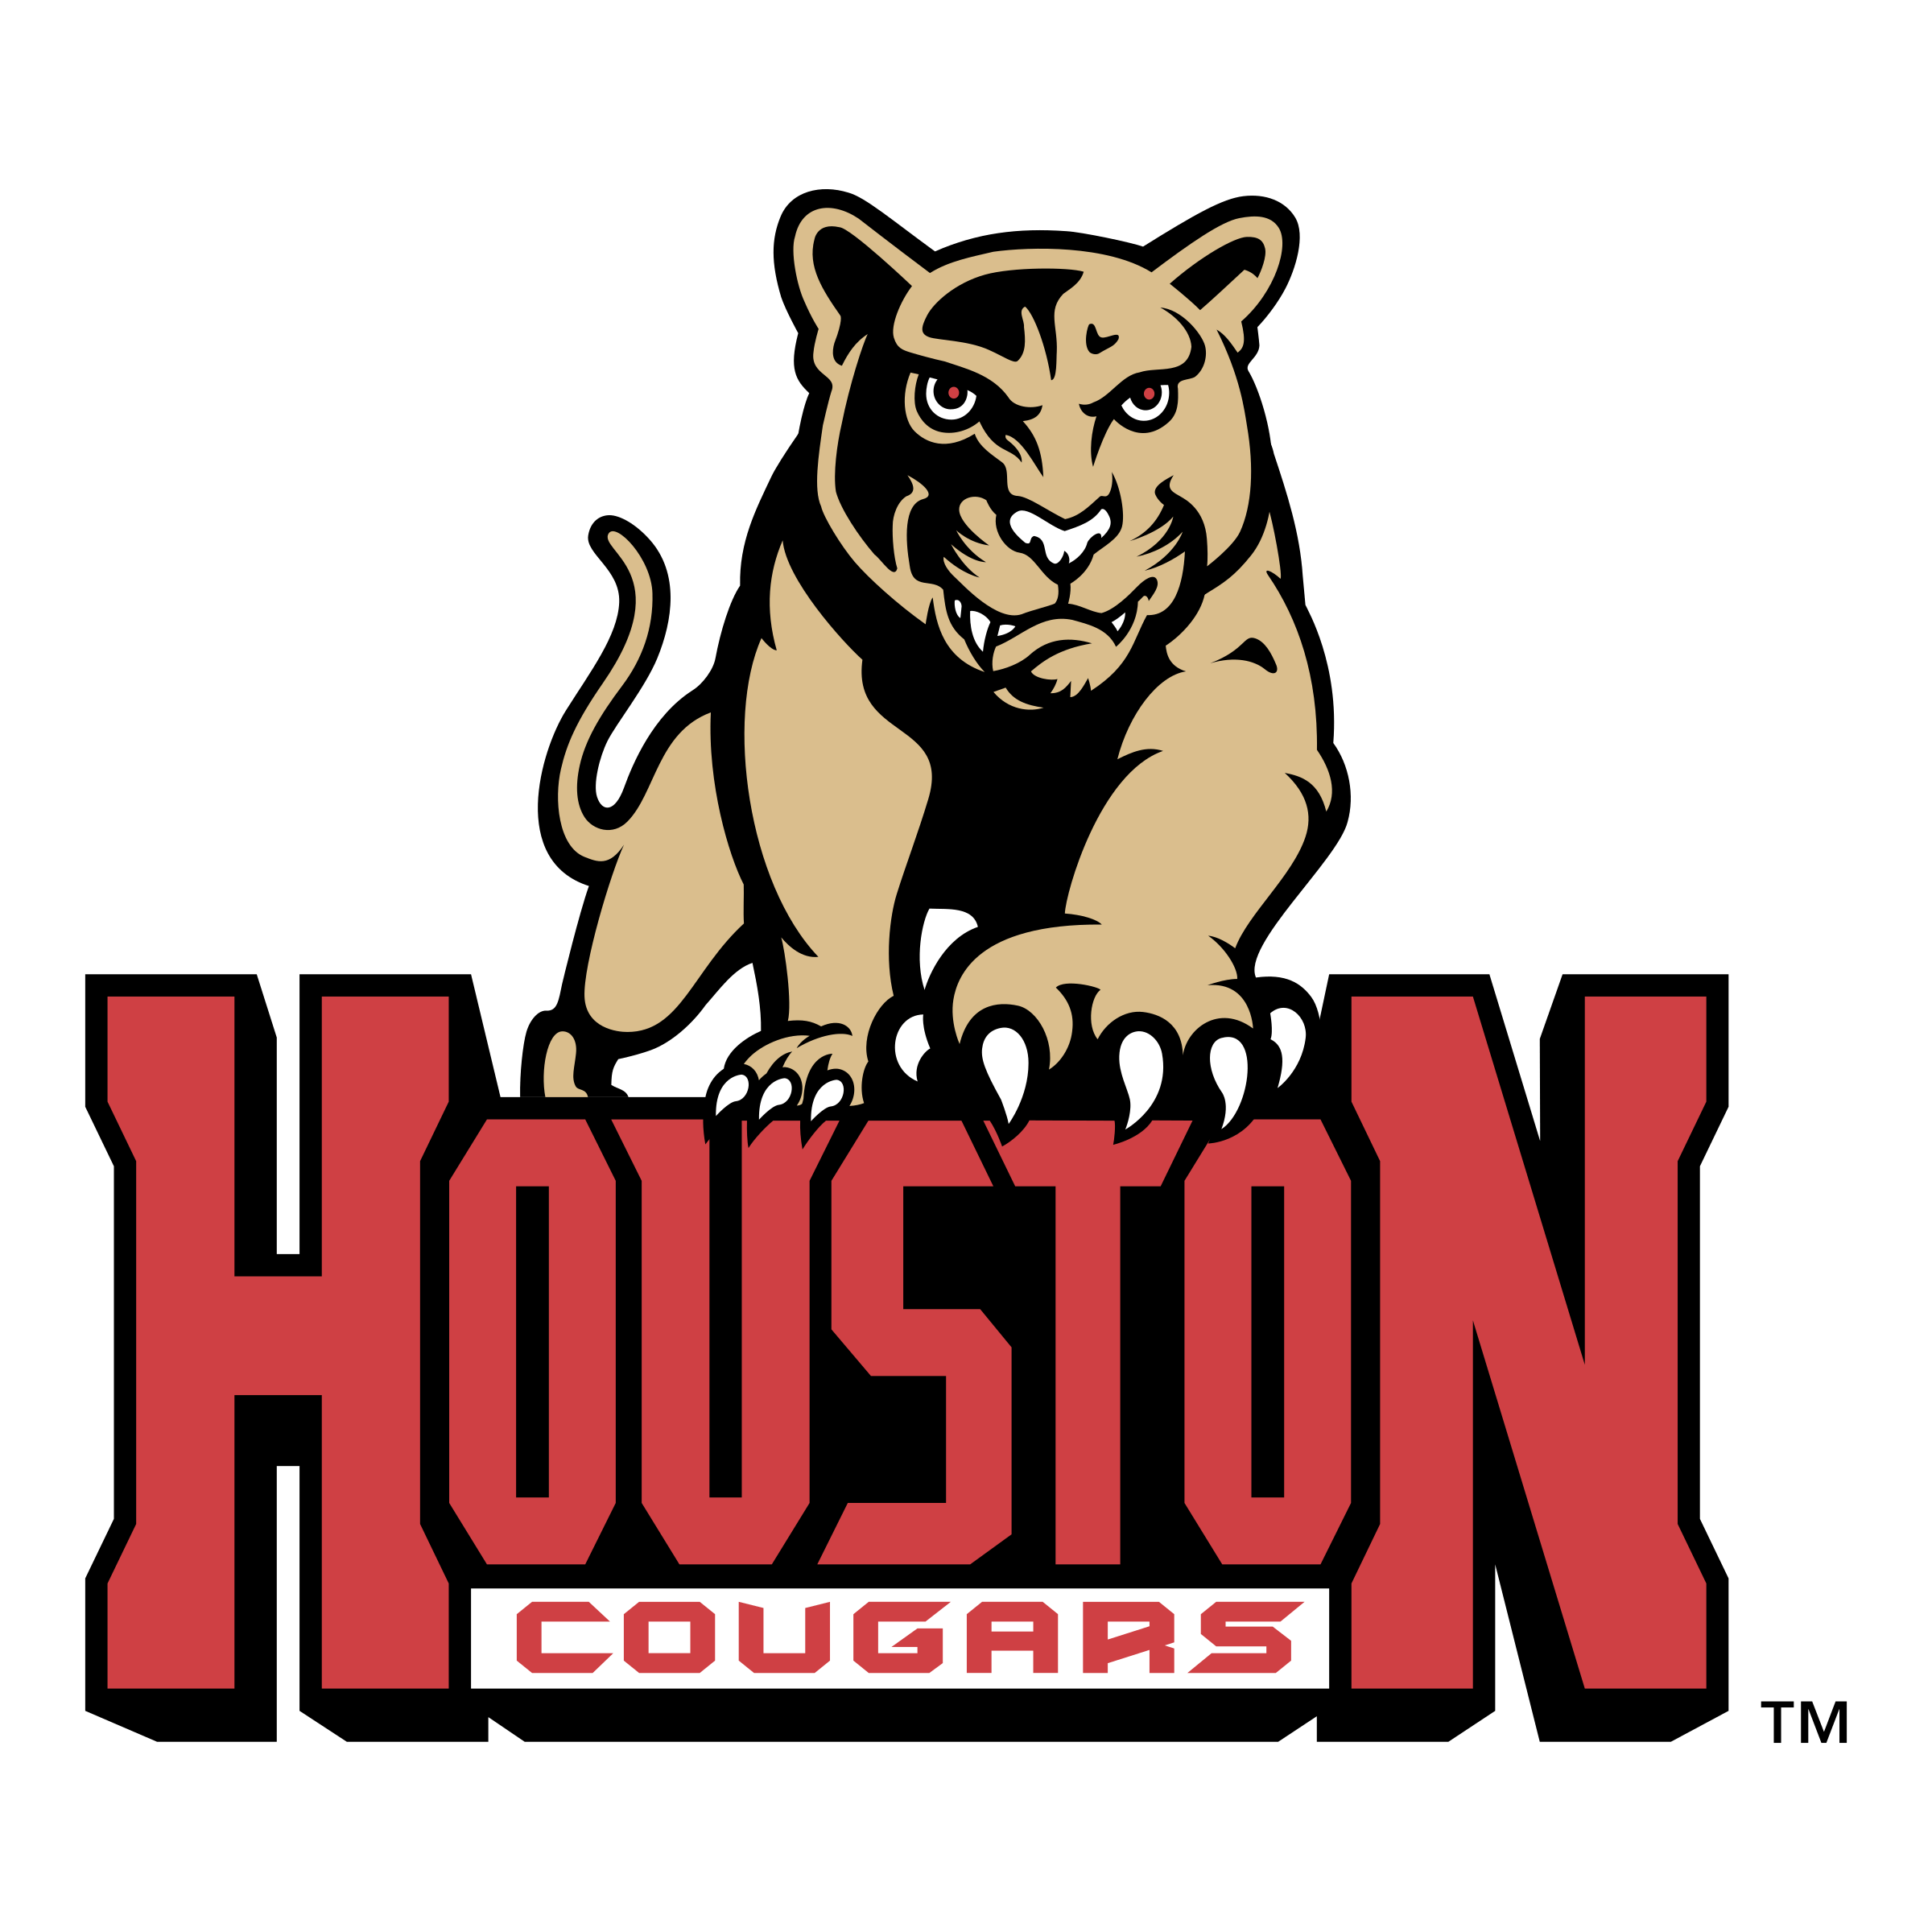 Cougars Logo - Houston Cougars Logo PNG Transparent & SVG Vector - Freebie Supply